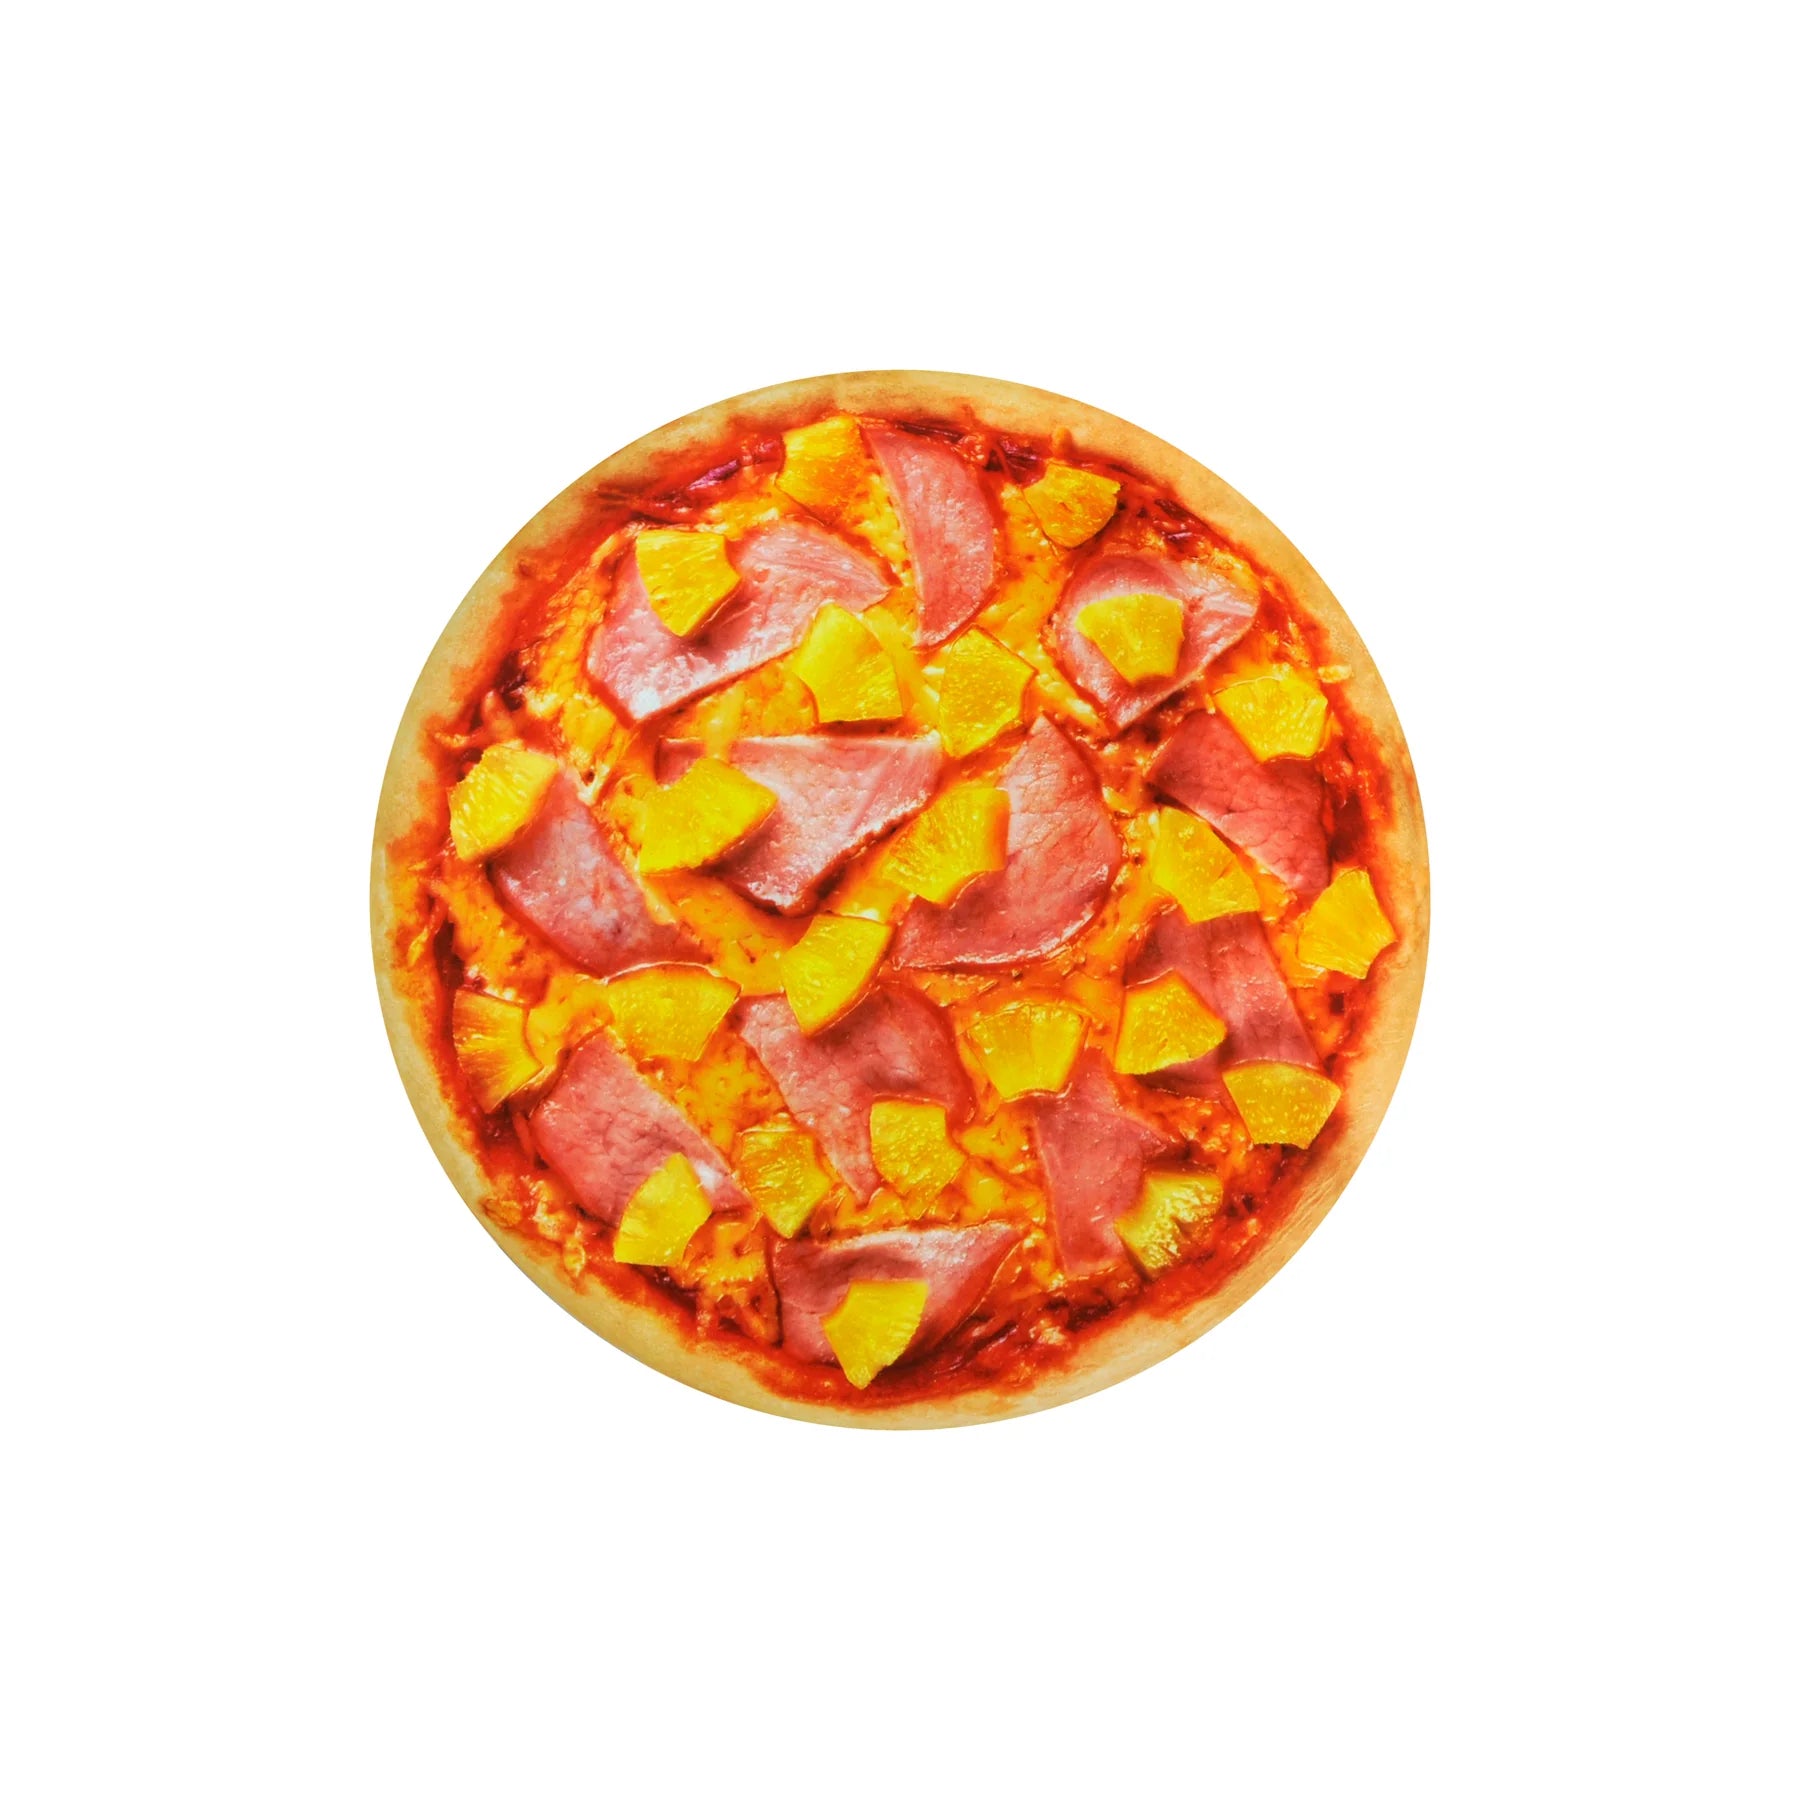 Waboba Fly Pies Pizza Discs